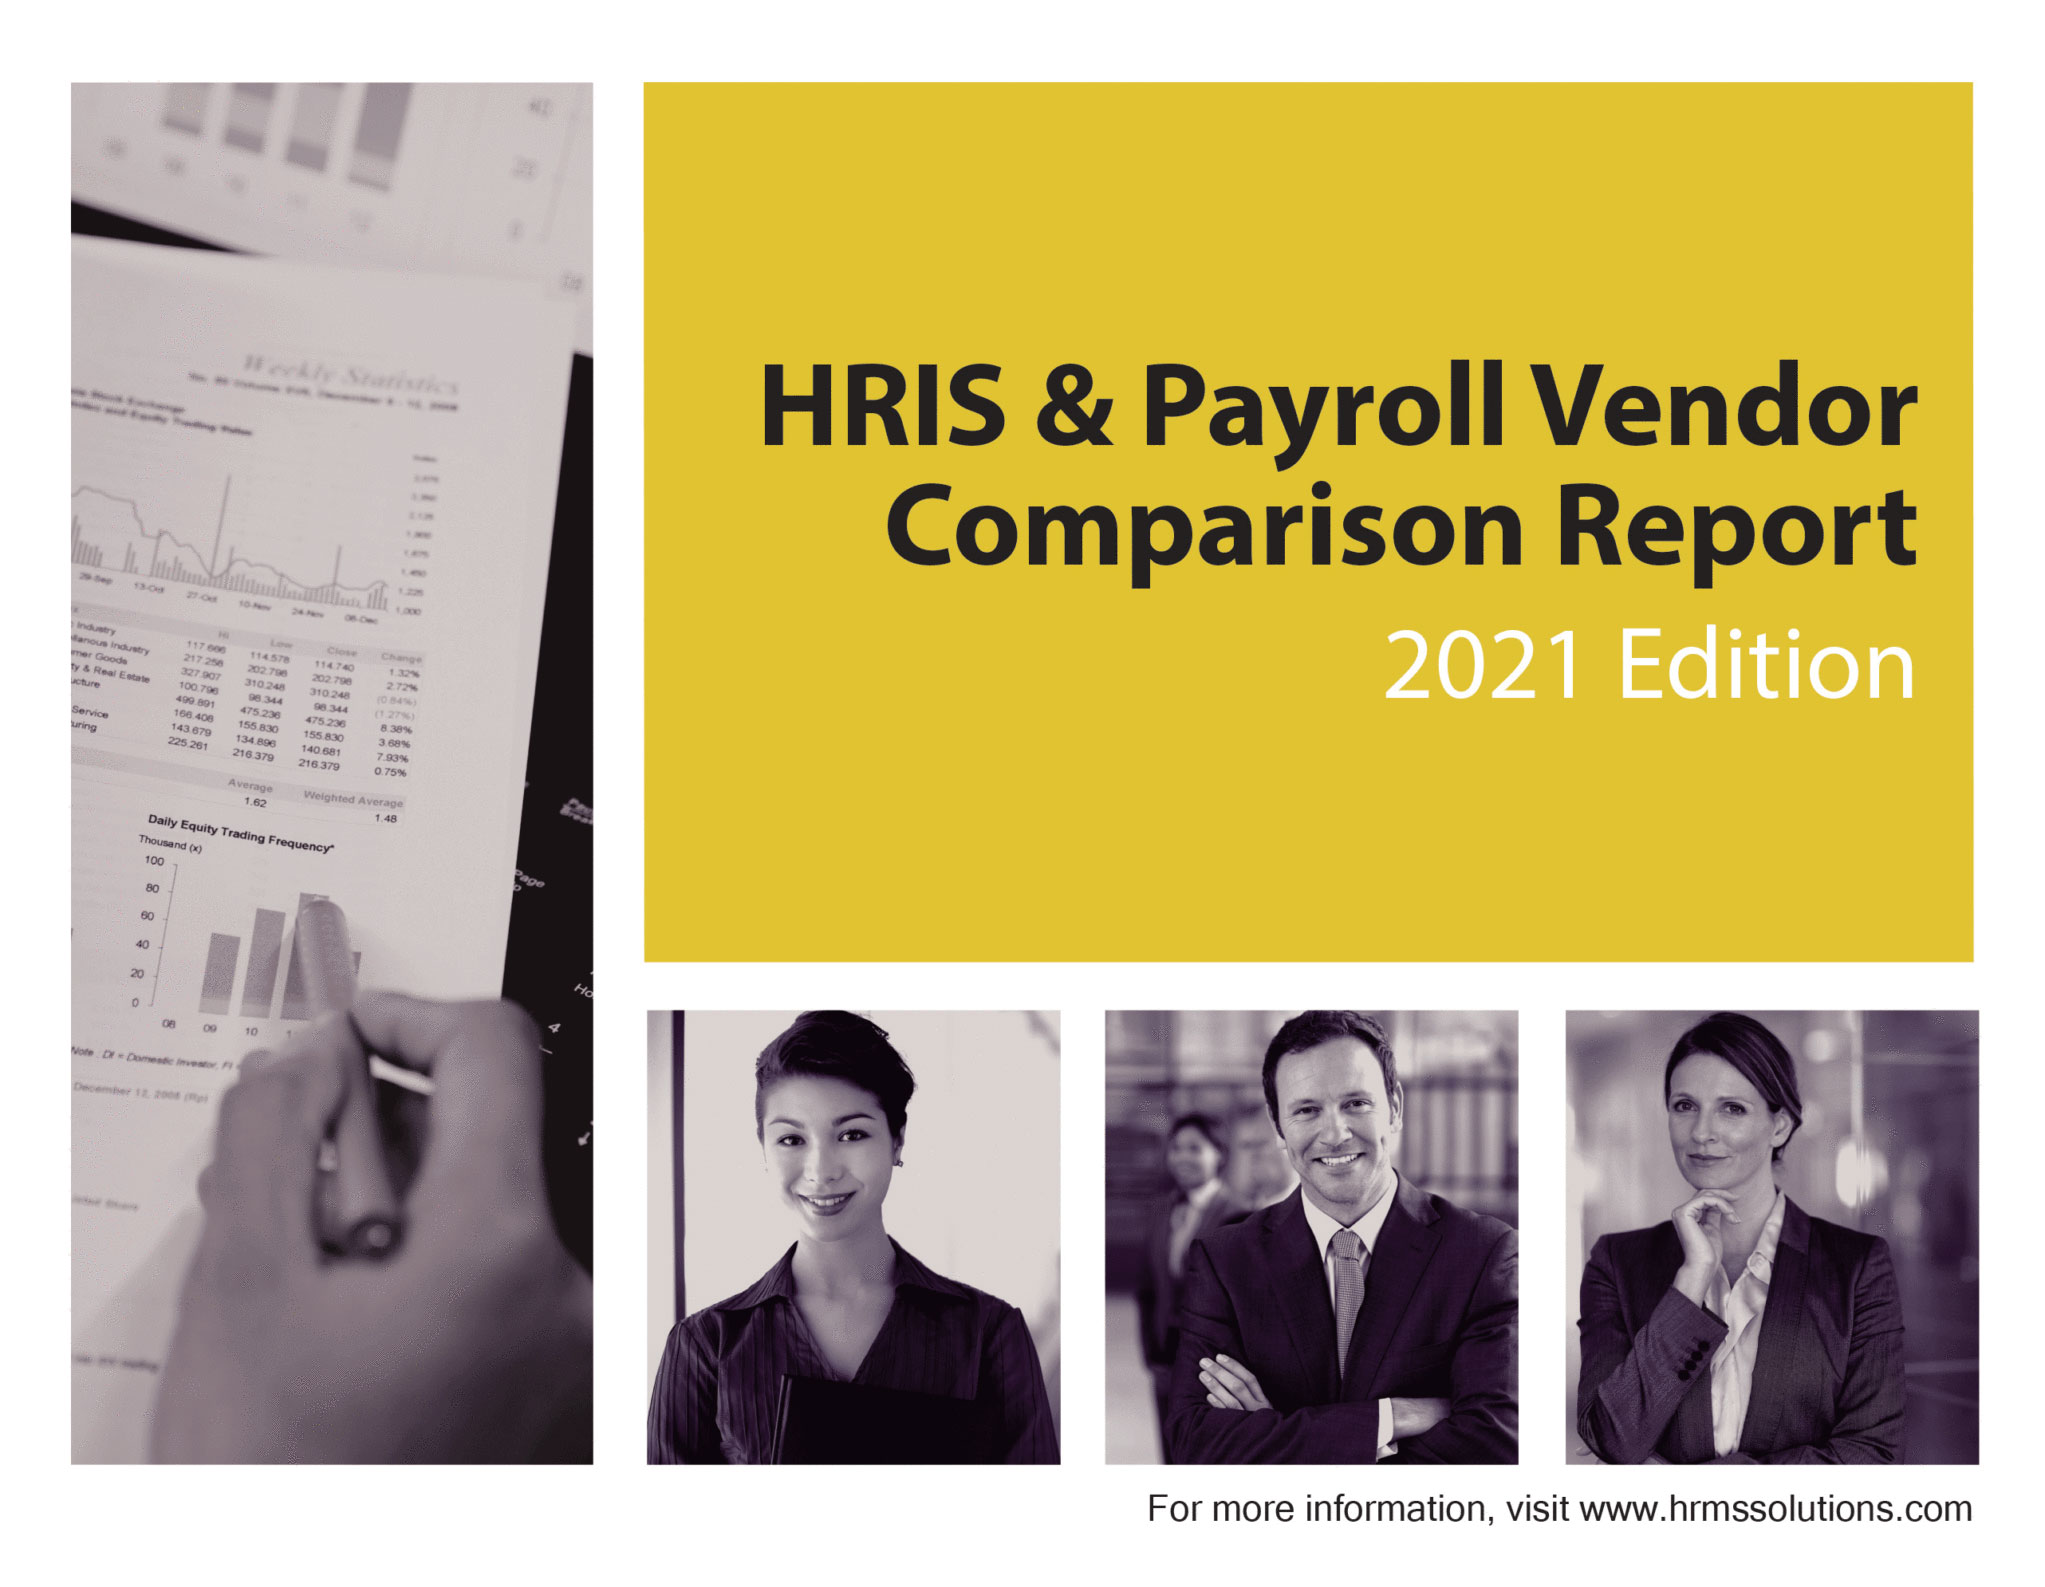 HRIS & Payroll Vendor Comparison Report 2021